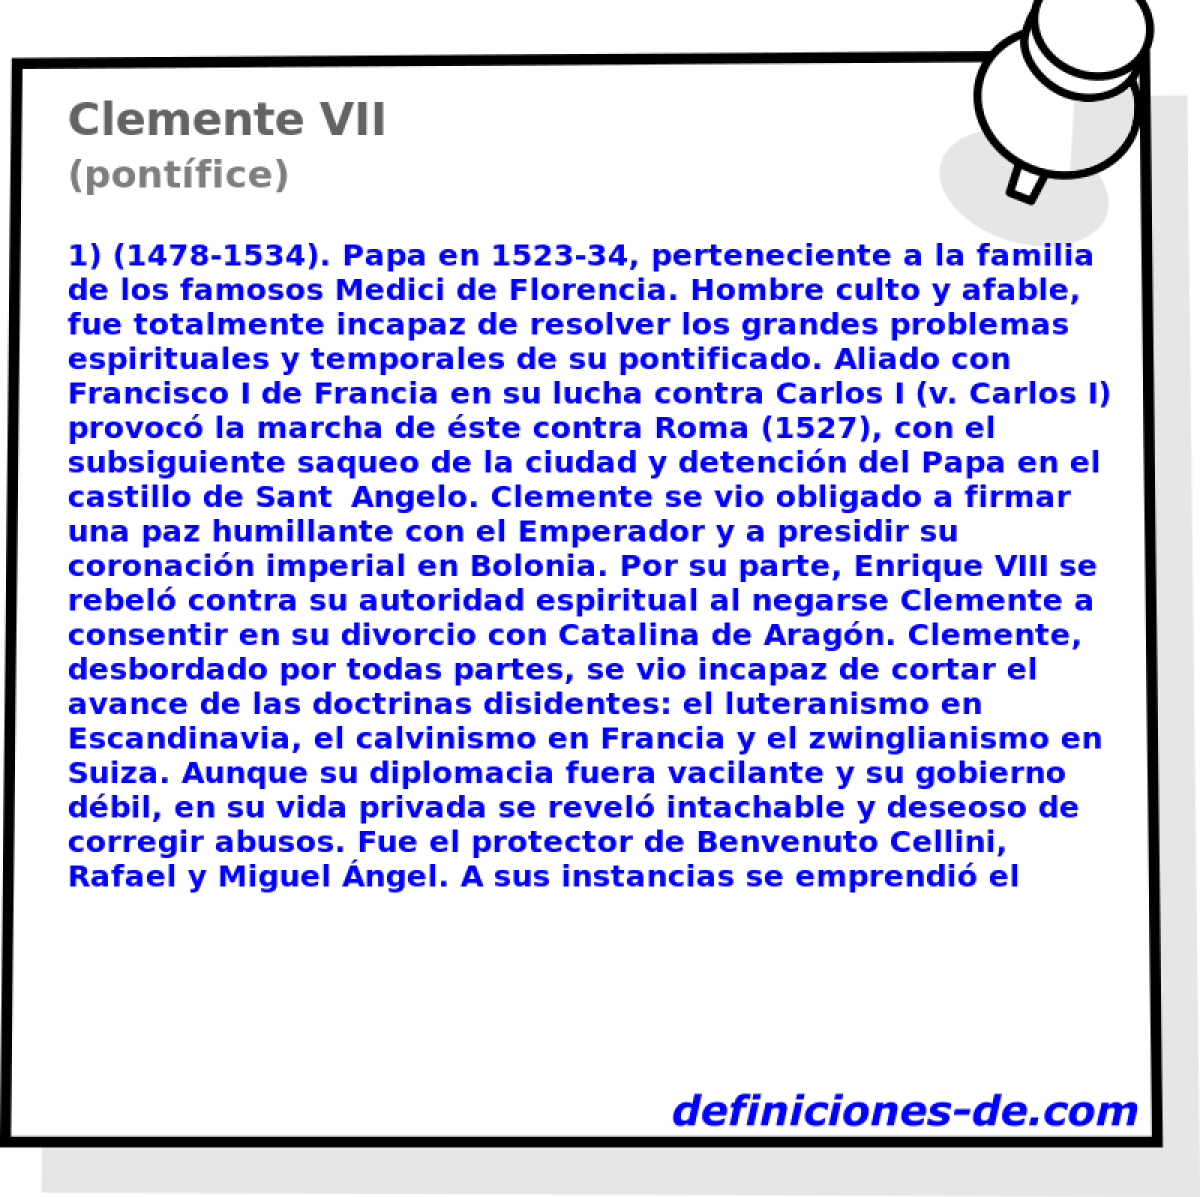 Clemente VII (pontfice)